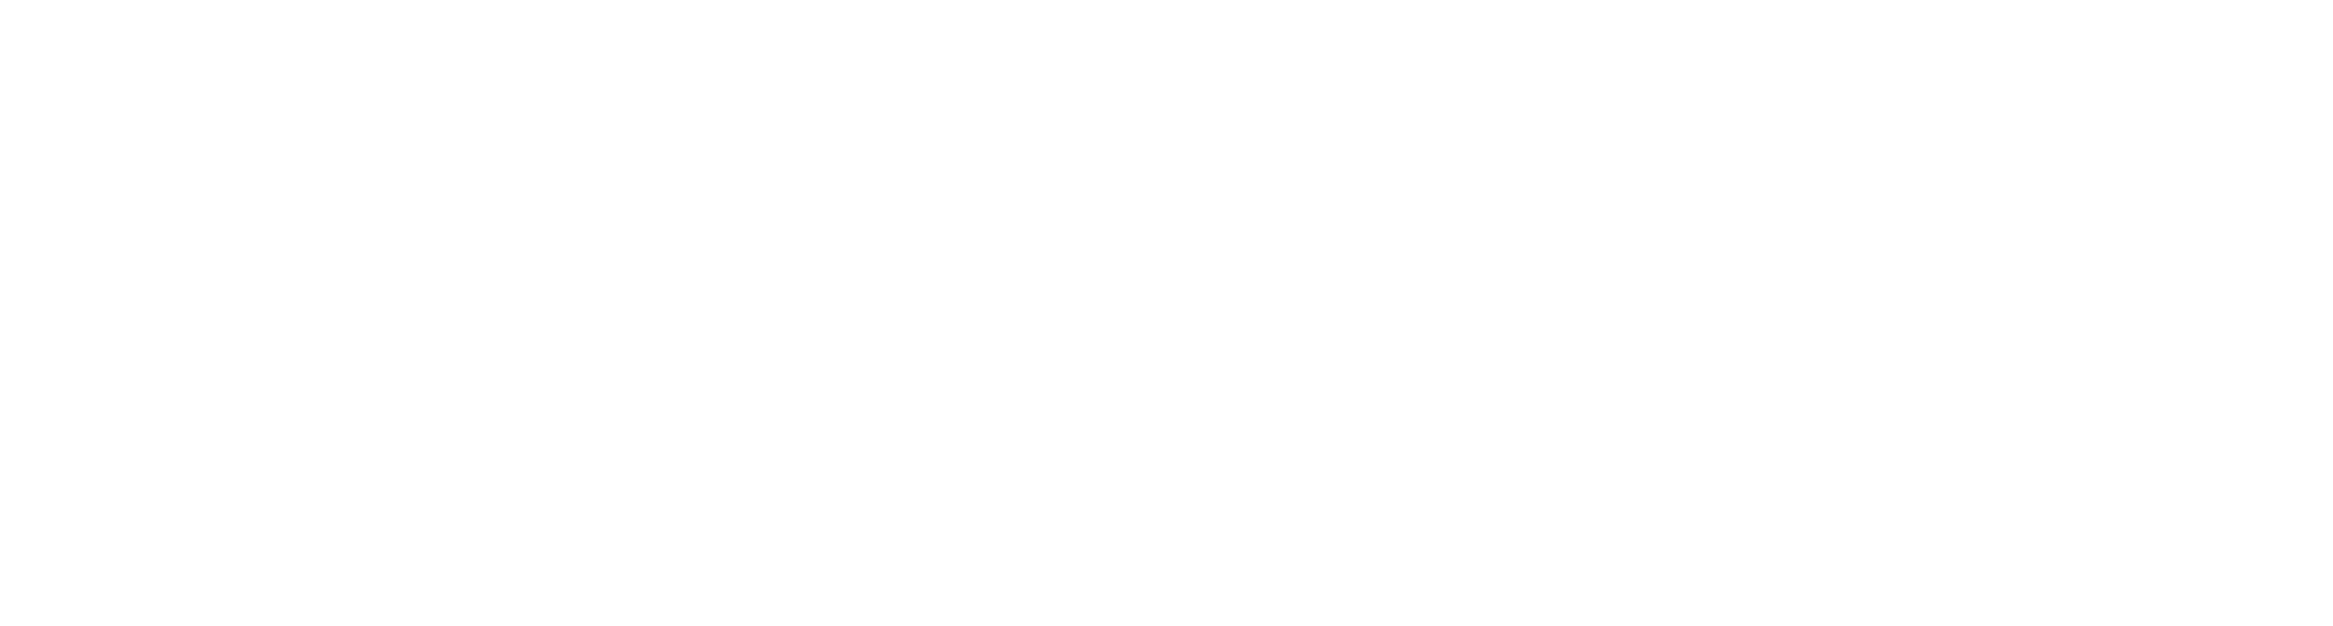 Carle Logo - Home - Carle Illinois College of Medicine